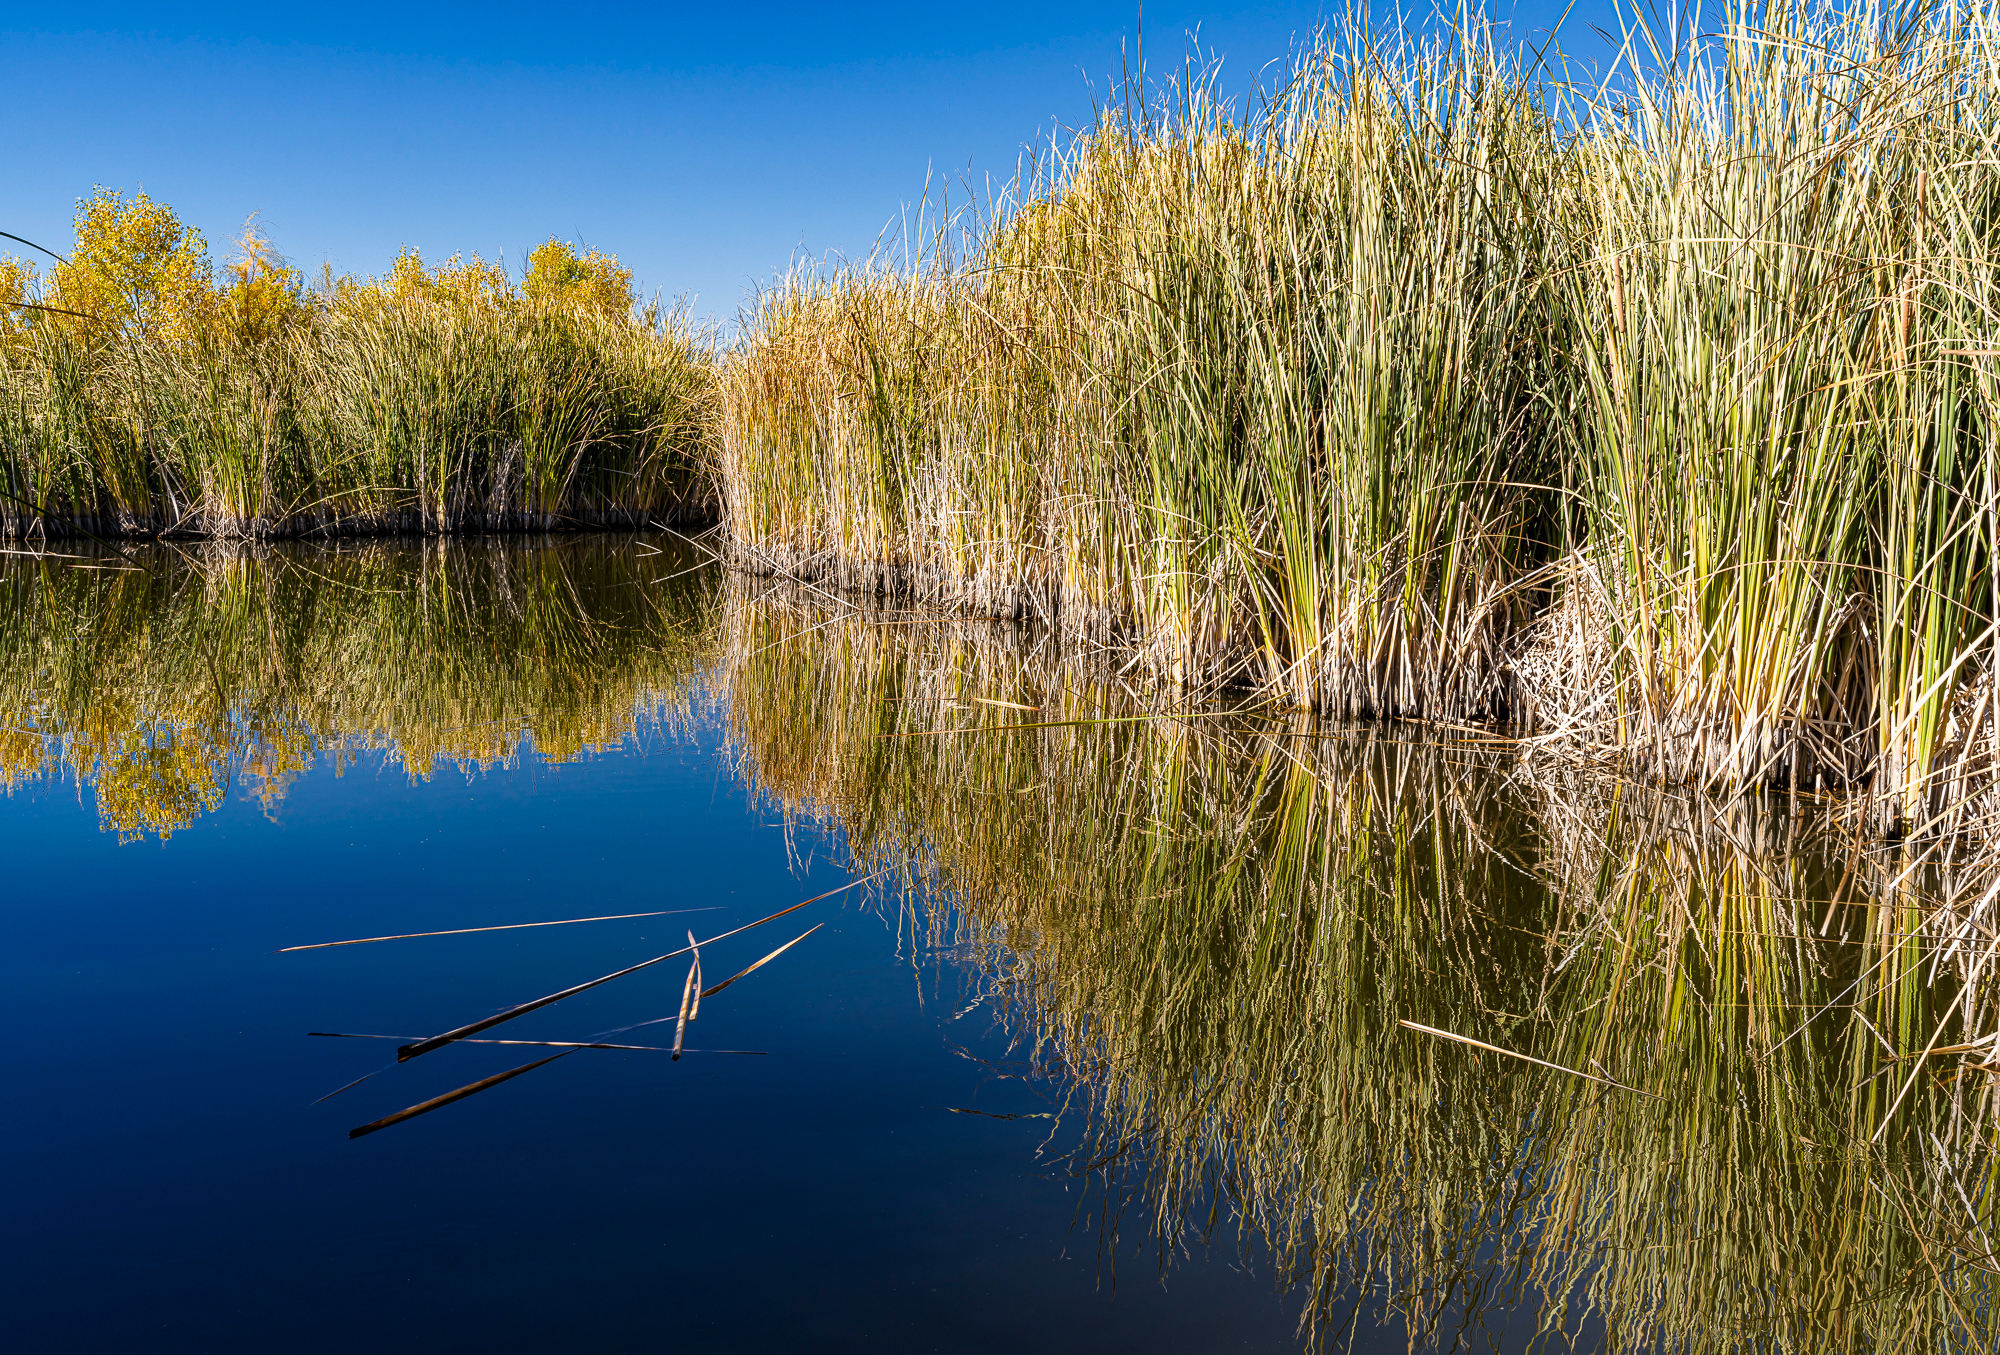 Sedona Wetlands, 2019; A7rM4, Sony 16-35 GM, +.7 EV, ISO 200